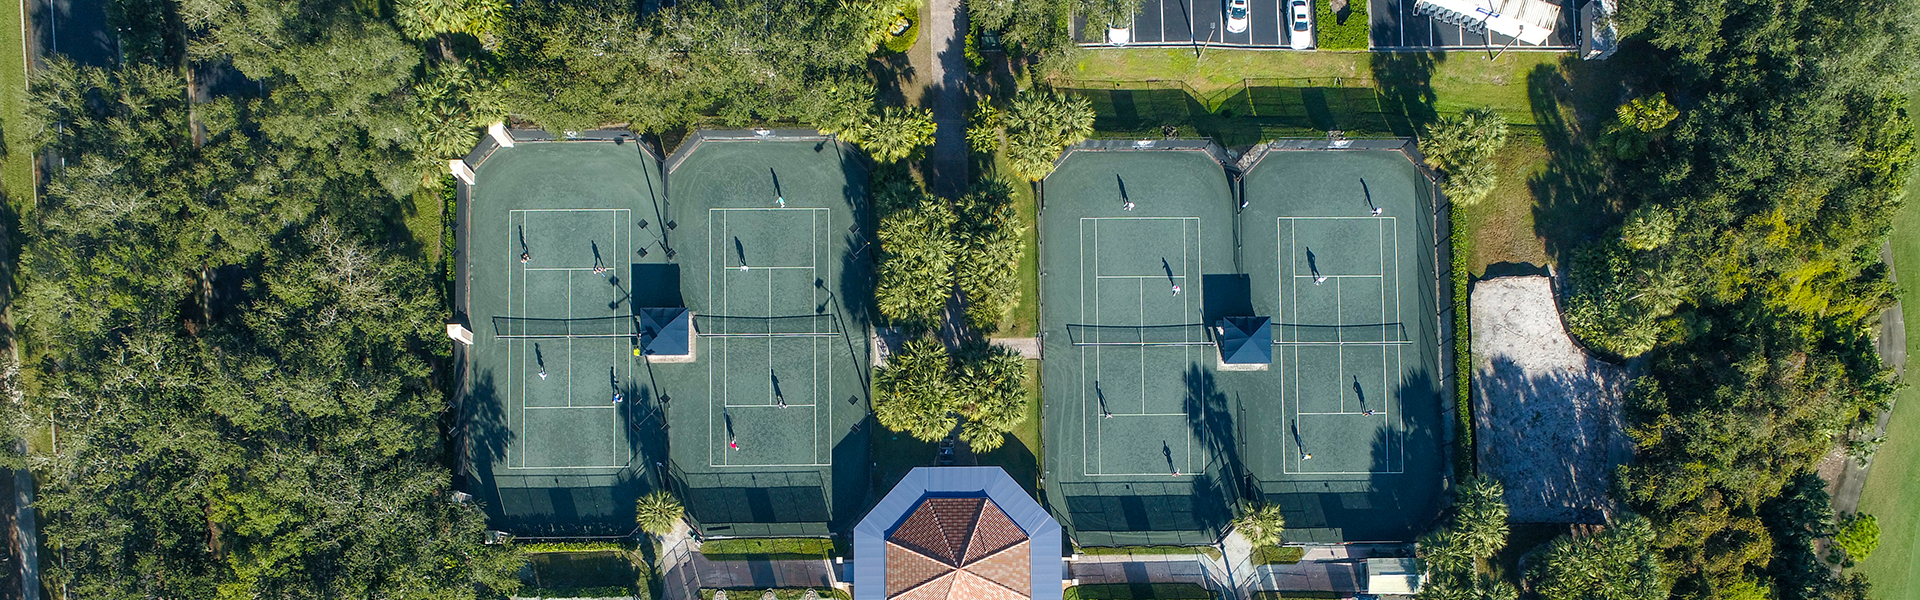 Har-Tru Championship Tennis Center